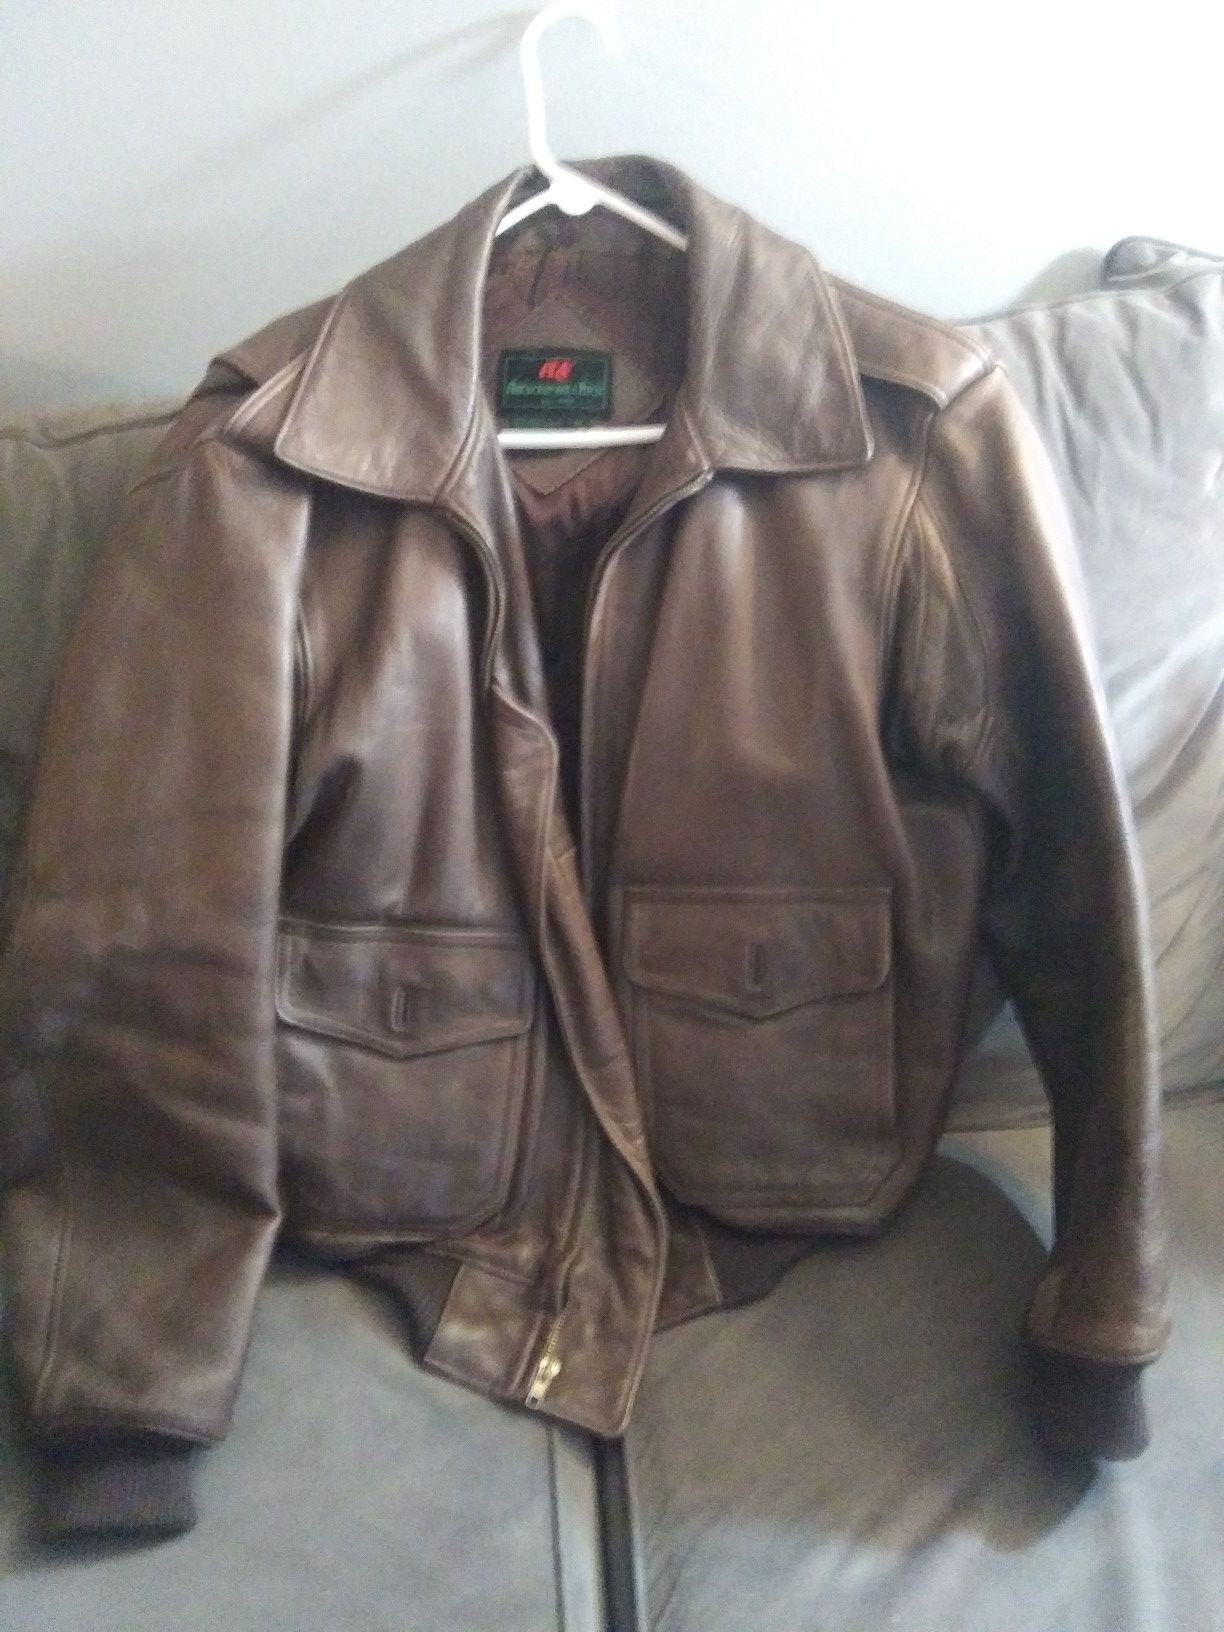 New Abercrombie & Fitch leather jacket size medium